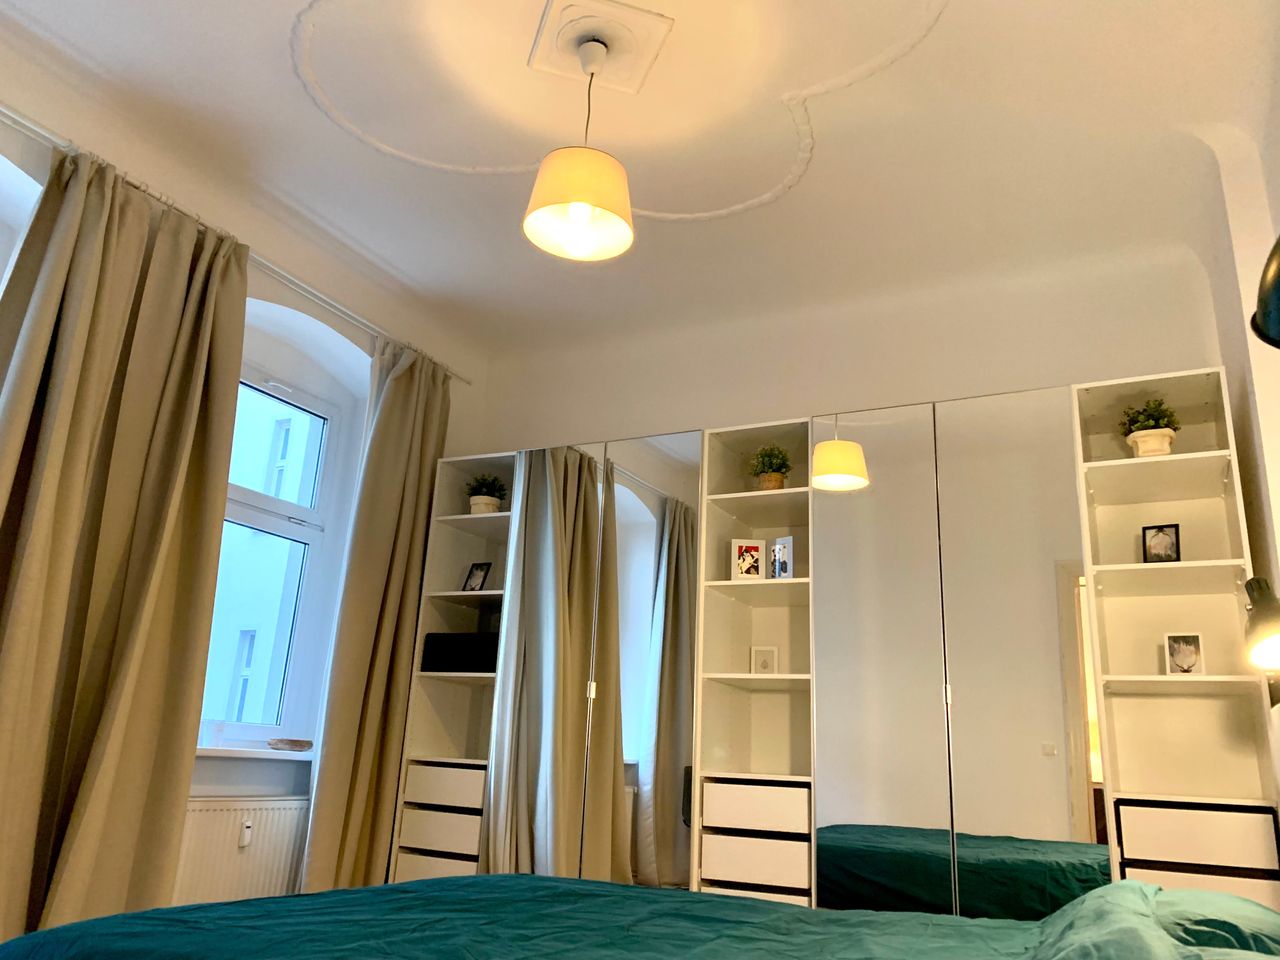 Cozy Altbau flat in a great Prenzlauer Berg location